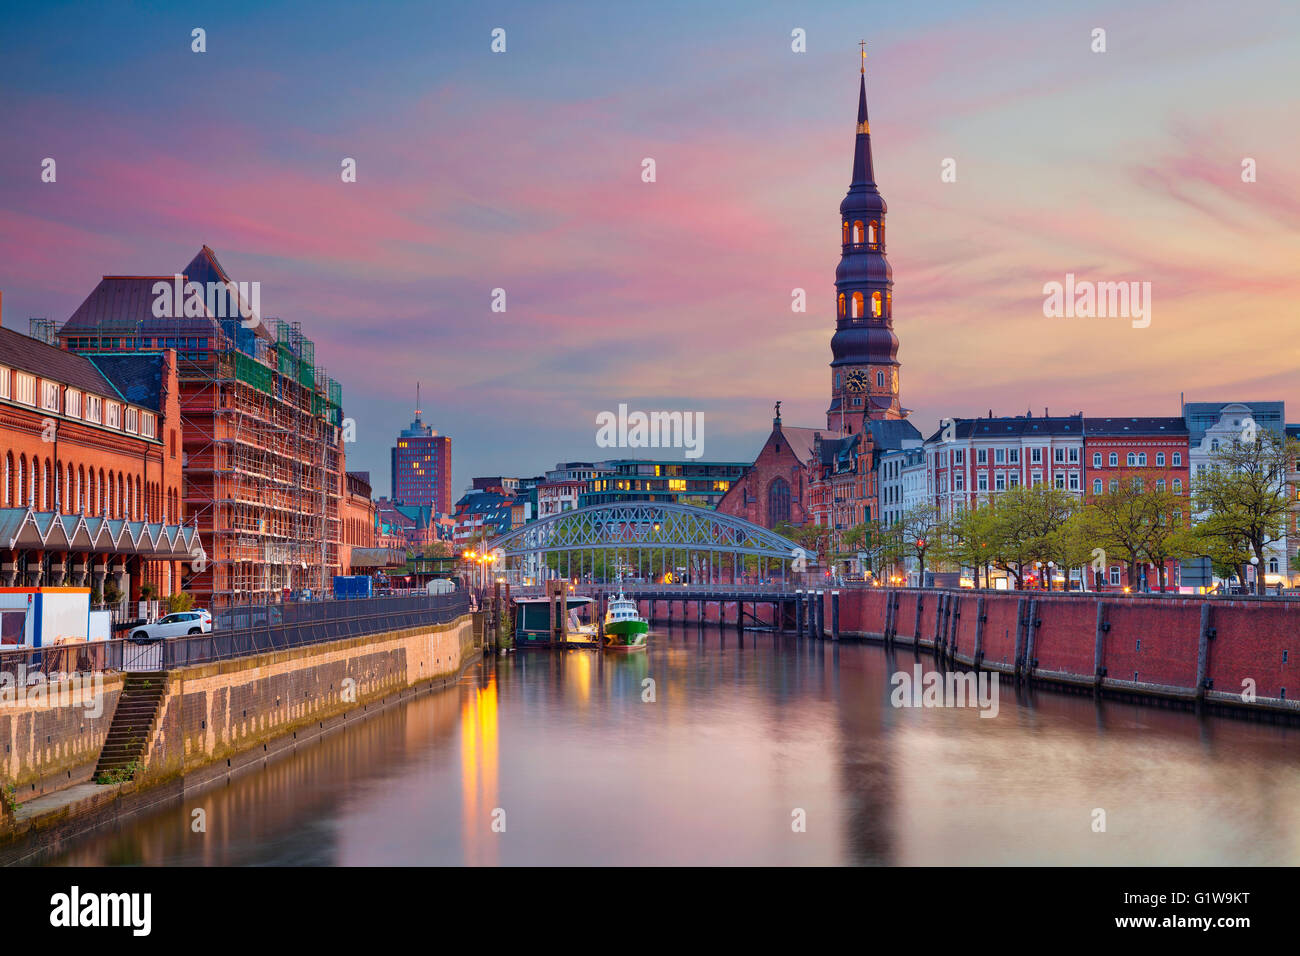 Hamburgo. Imagen de Hamburgo- Speicherstadt durante el hermoso atardecer. Foto de stock